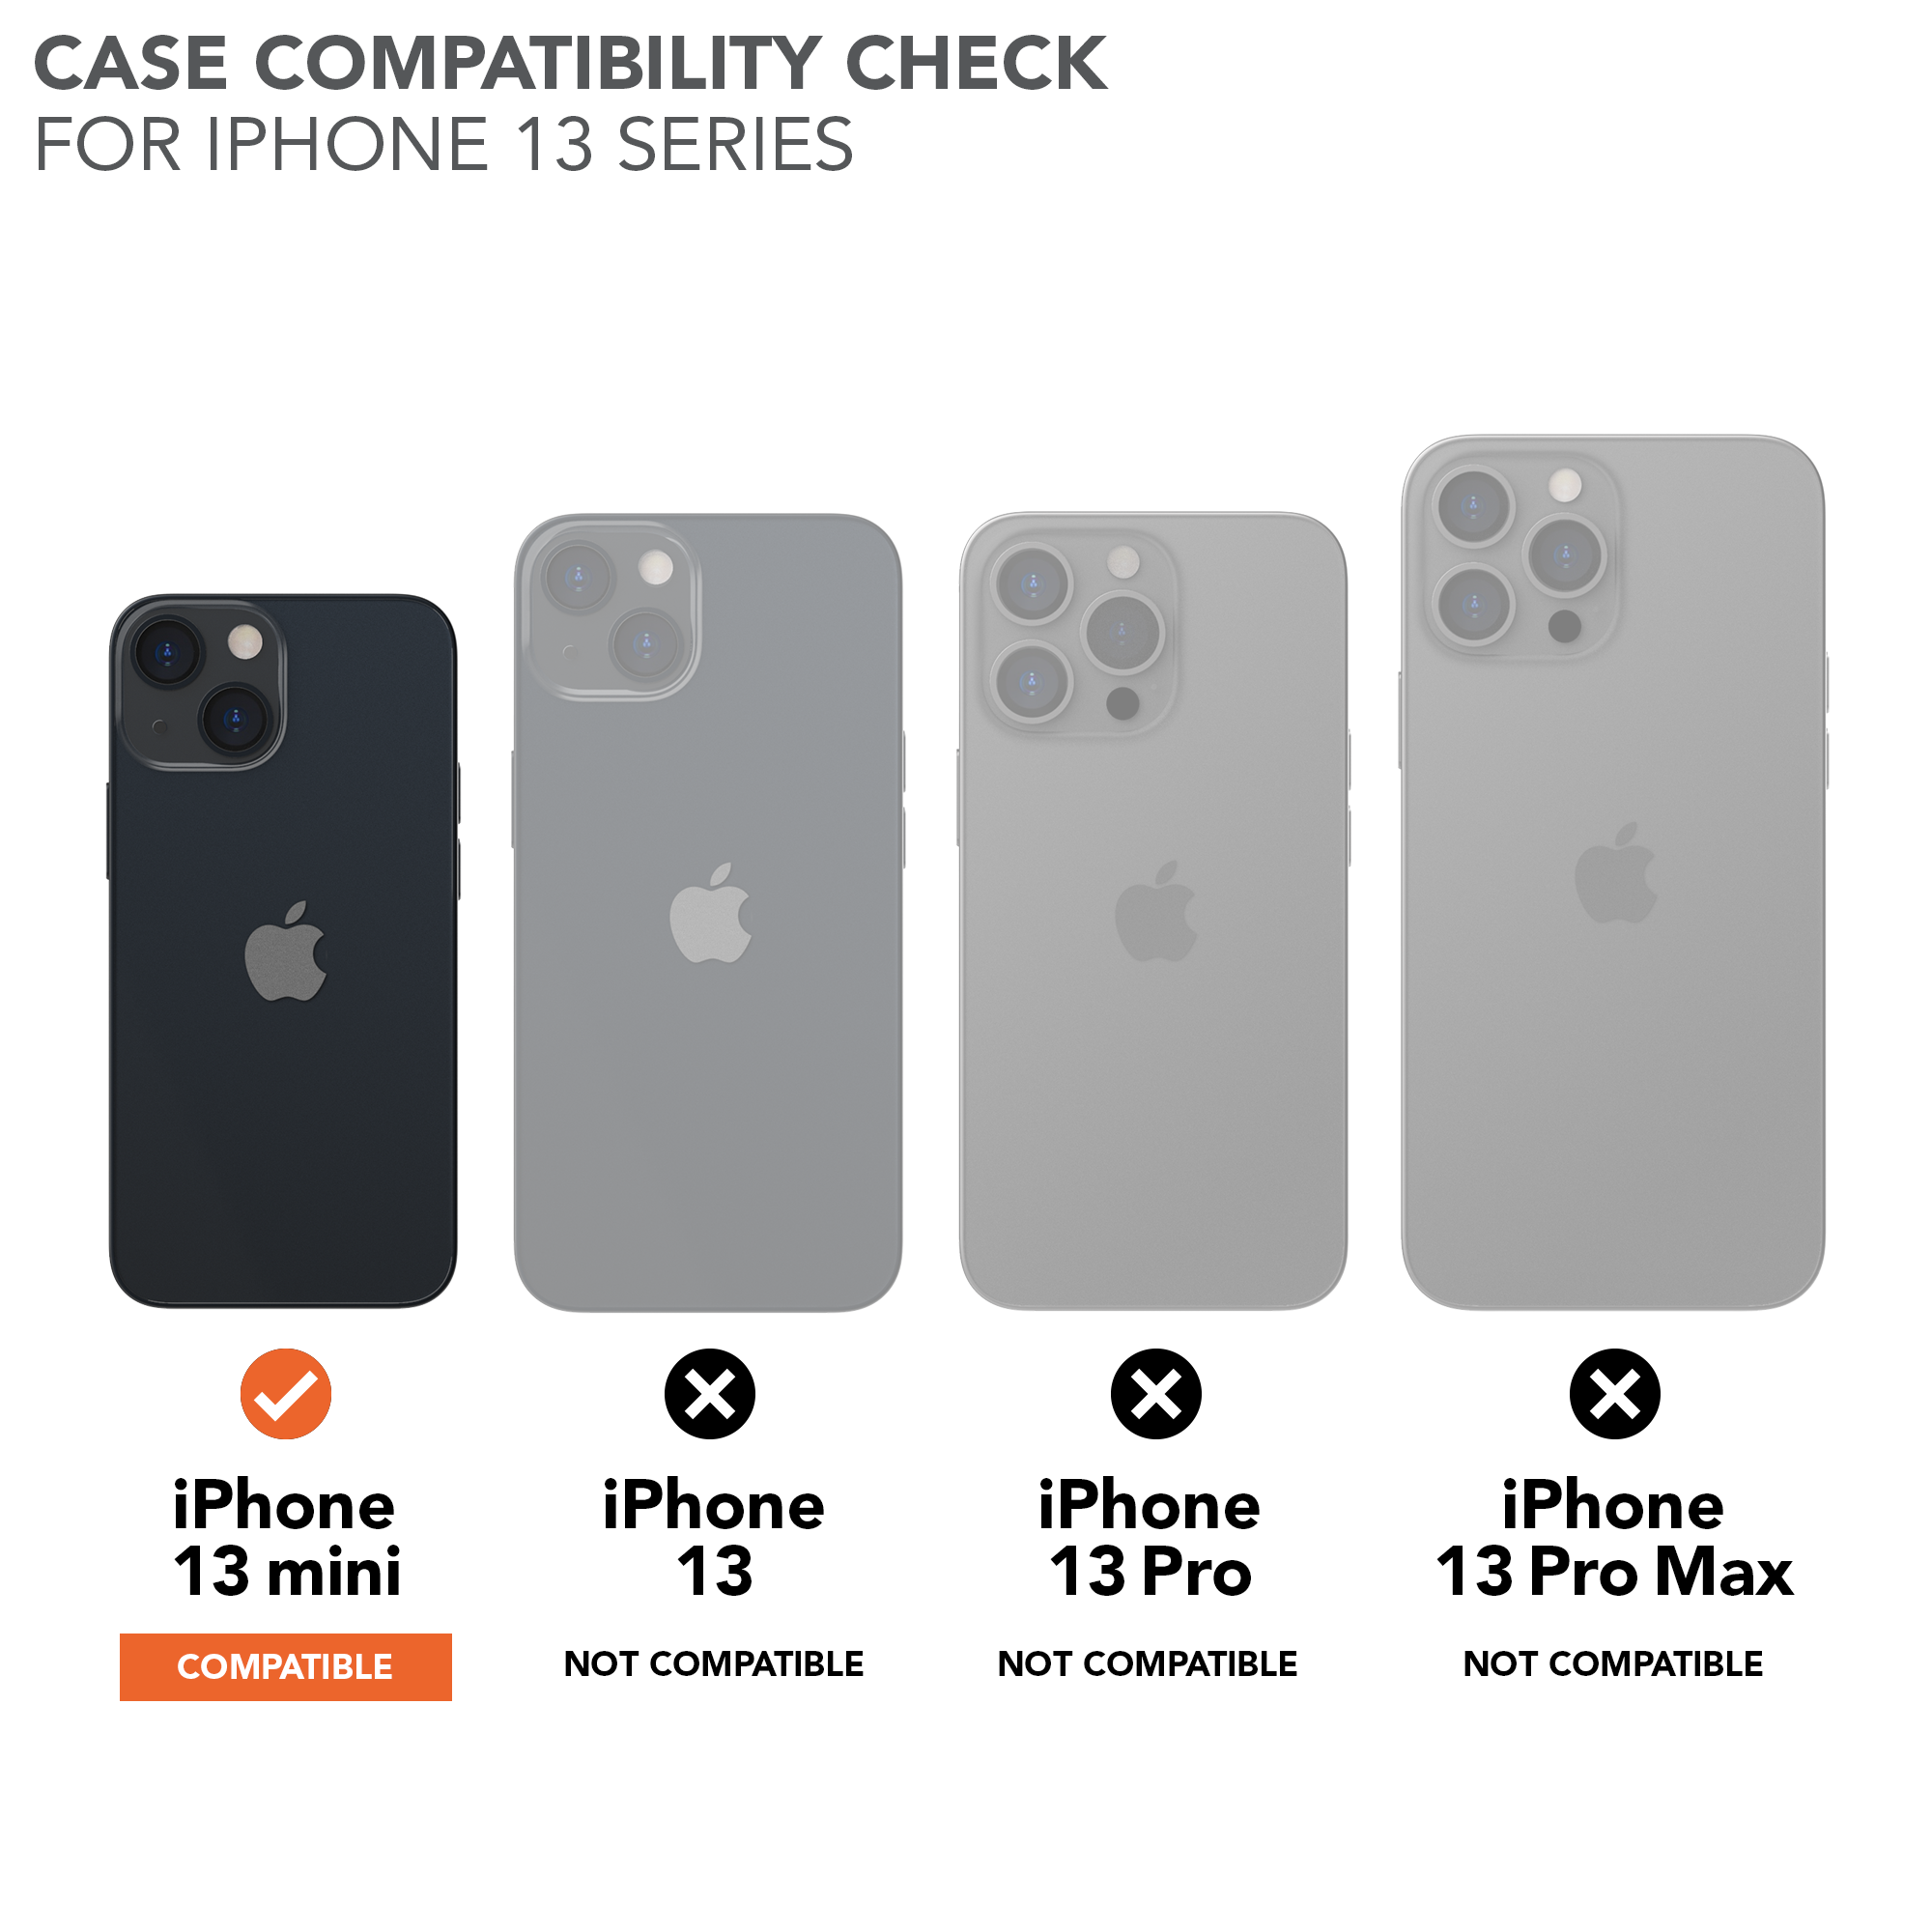 iPhone 13 Pro & iPhone 13 mini comparison